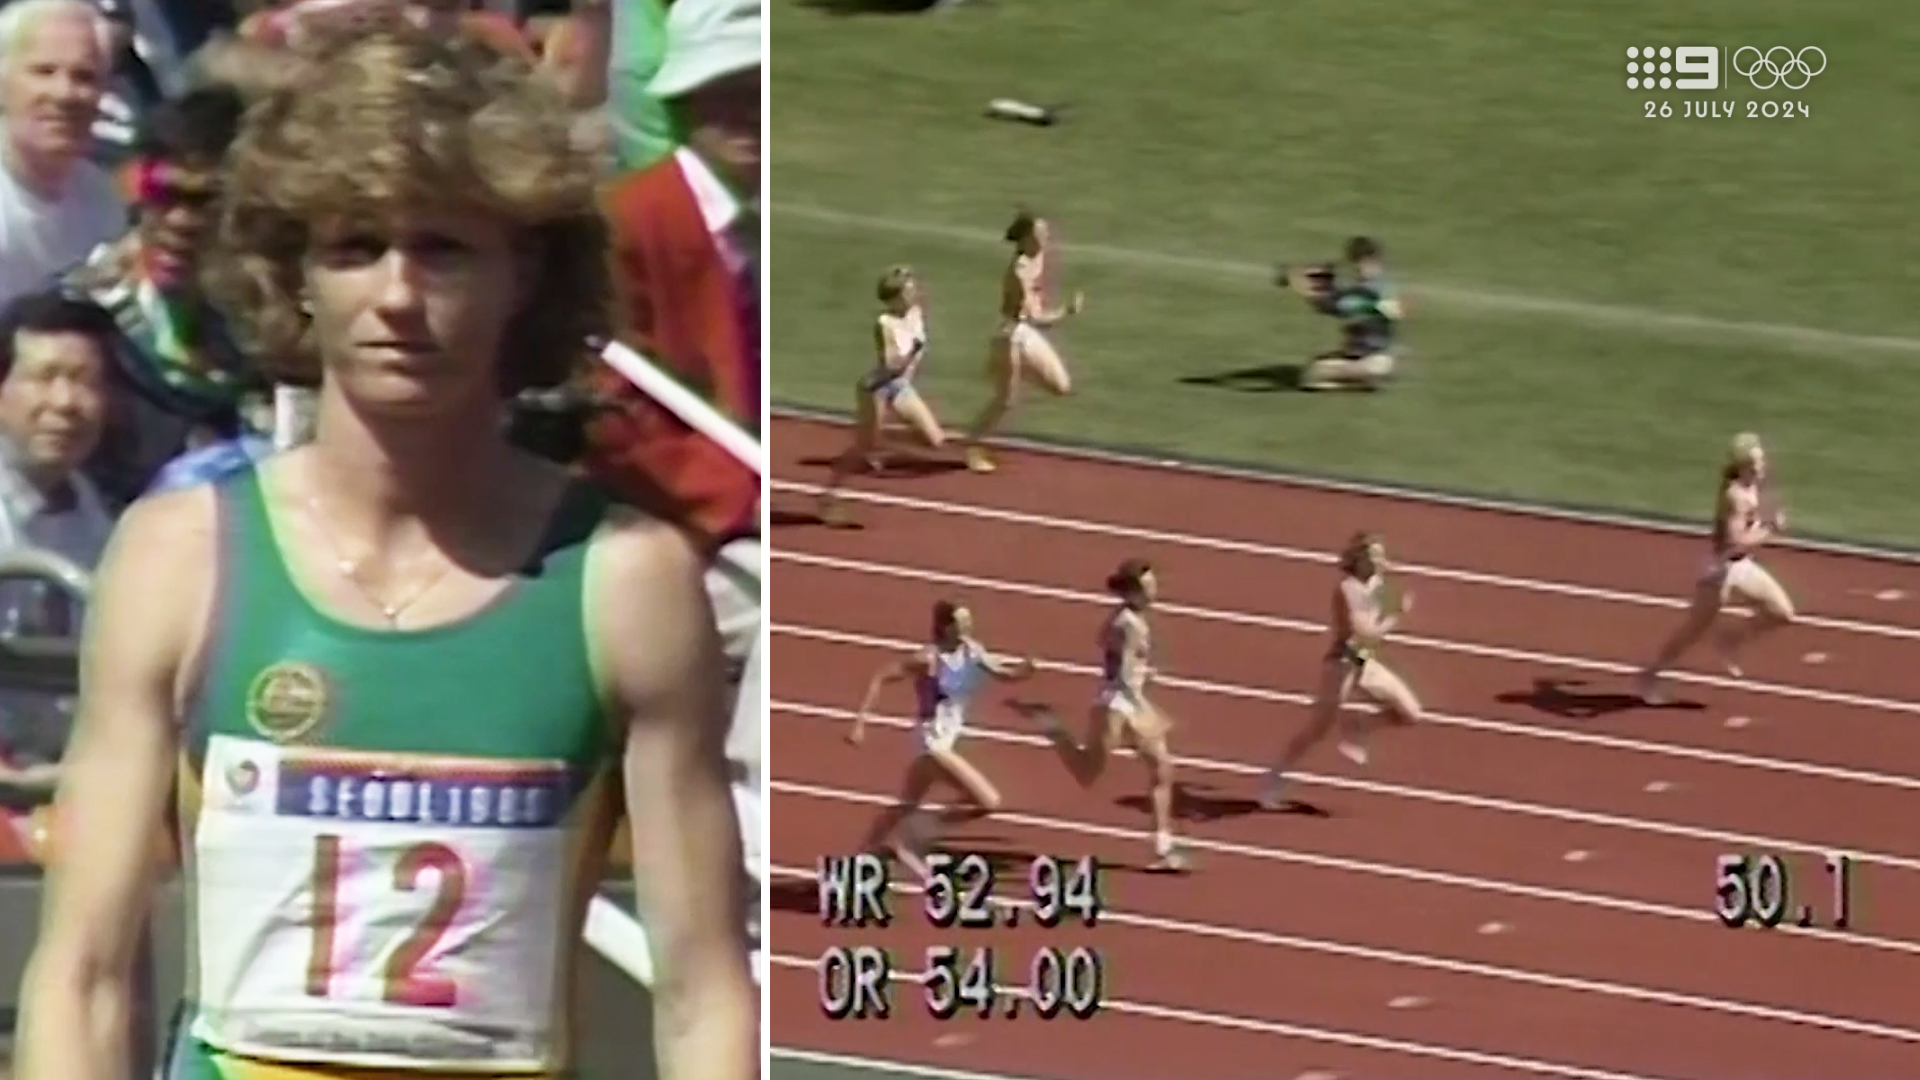 Debbie Flintoff-King's astonishing Olympic victory